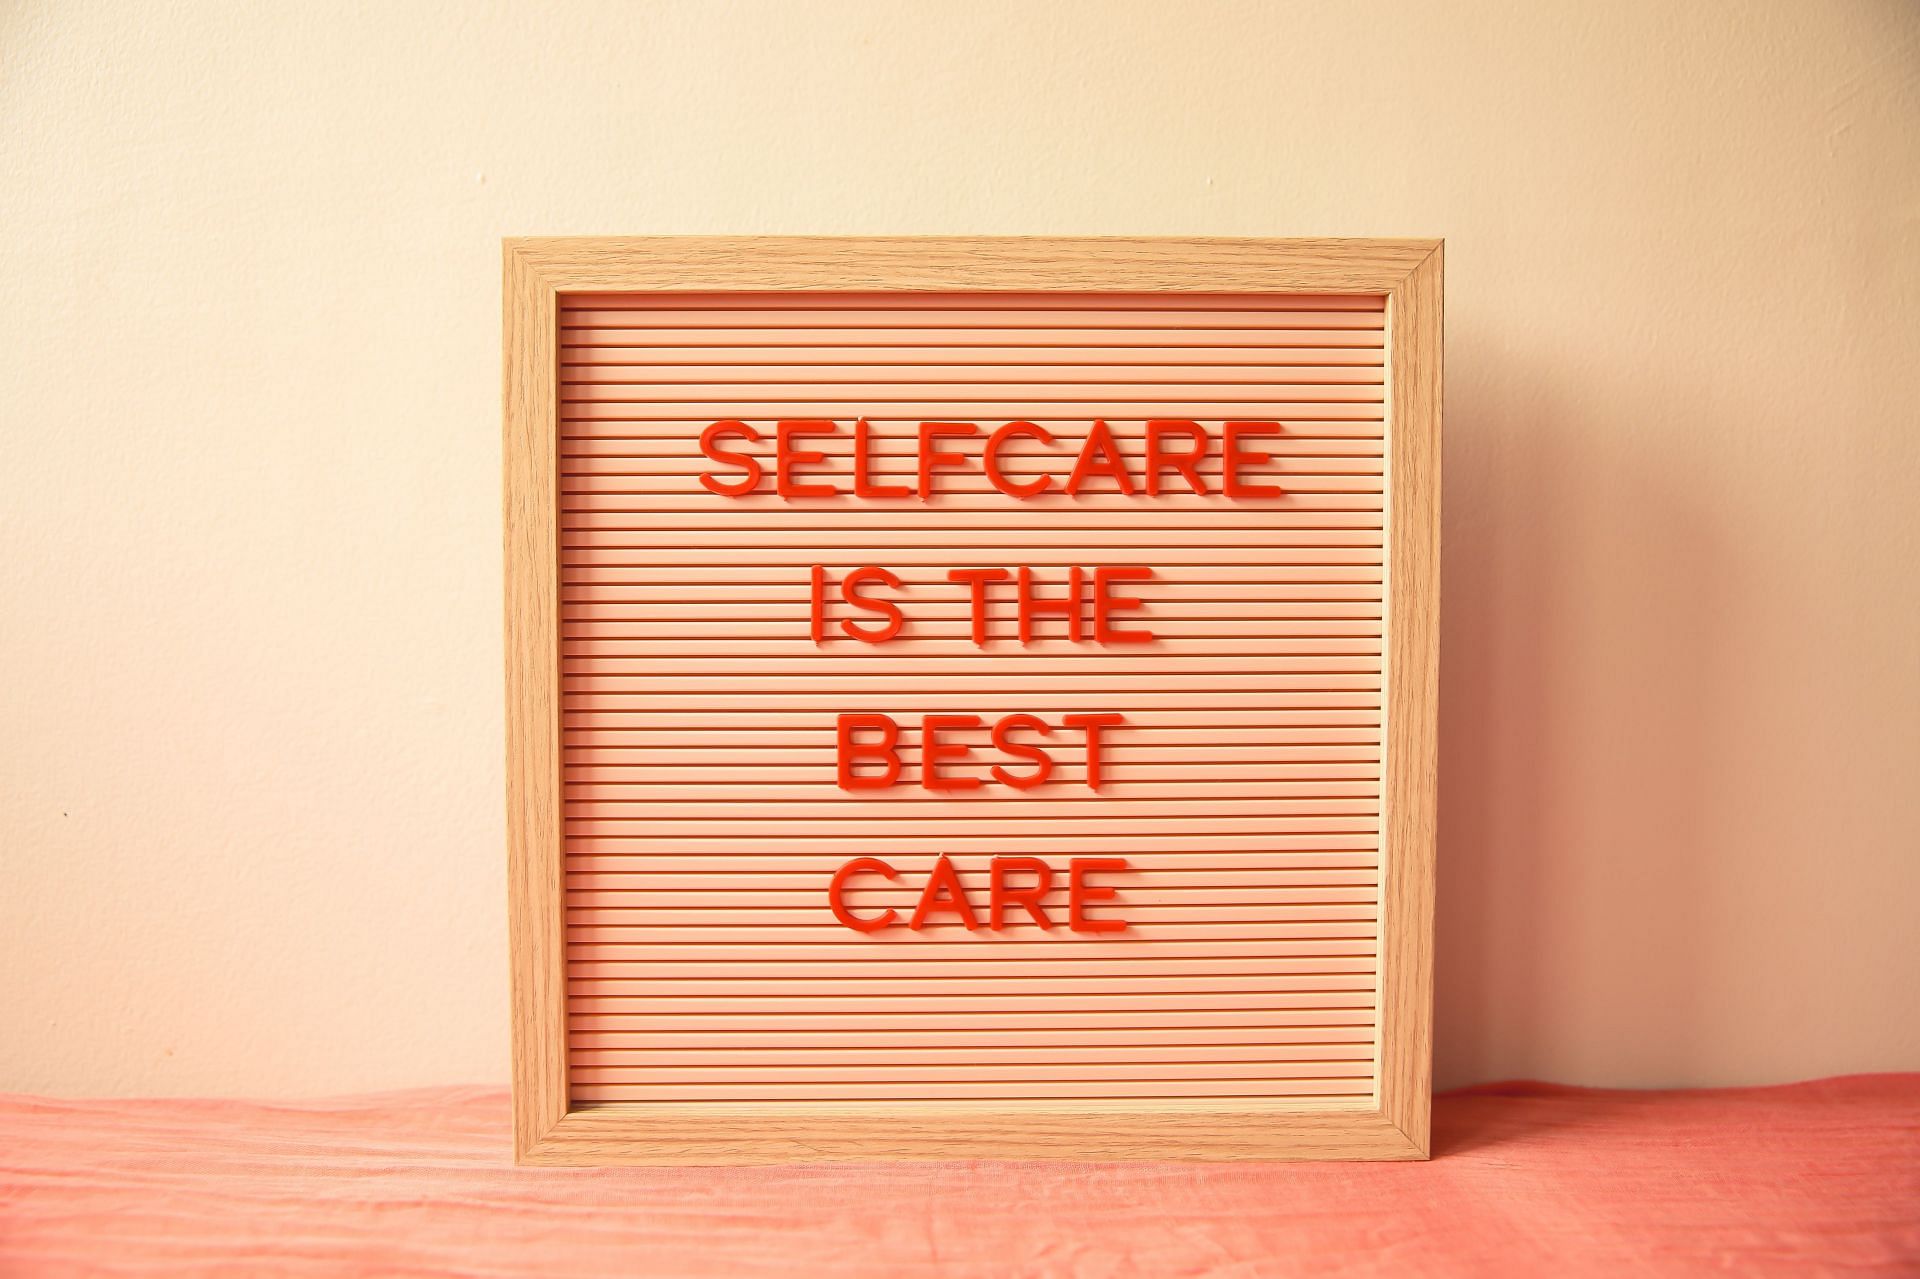 Self-care sunday ideas to try (Image via Unsplash / Ava Sol)